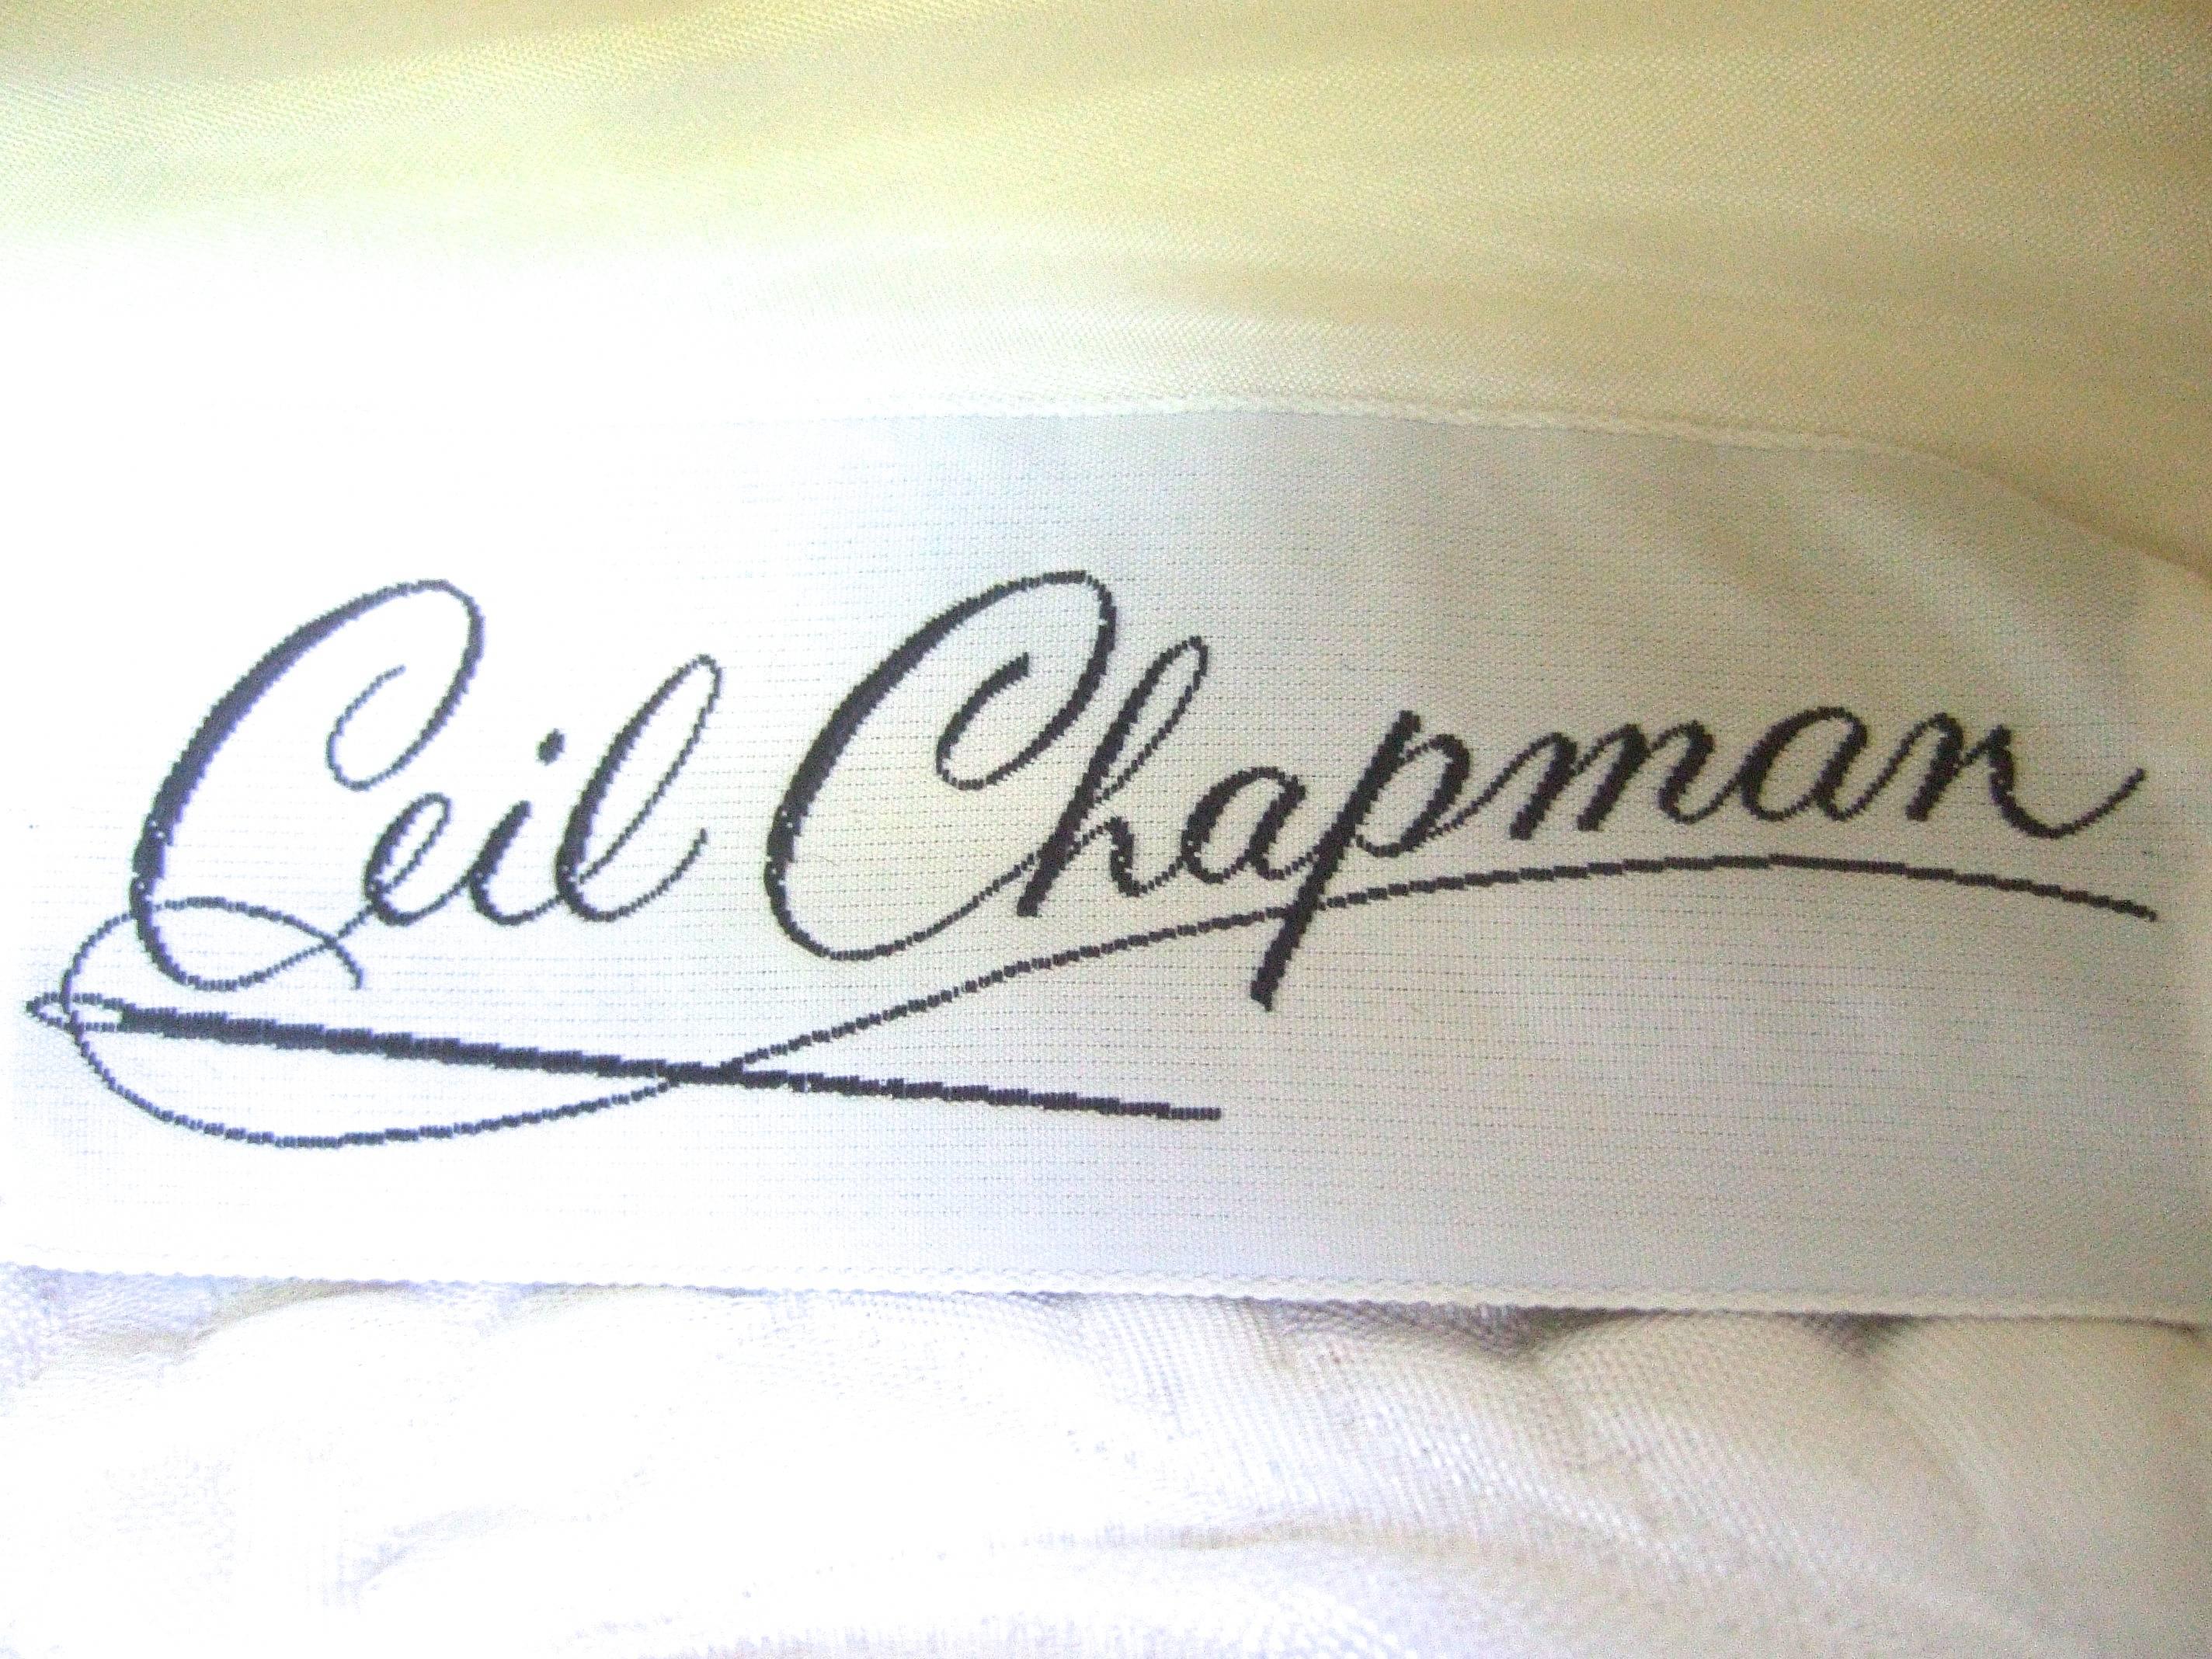 Ceil Chapman Stunning Ivory Brocade Jewellled Empire Gown c 1960 en vente 5